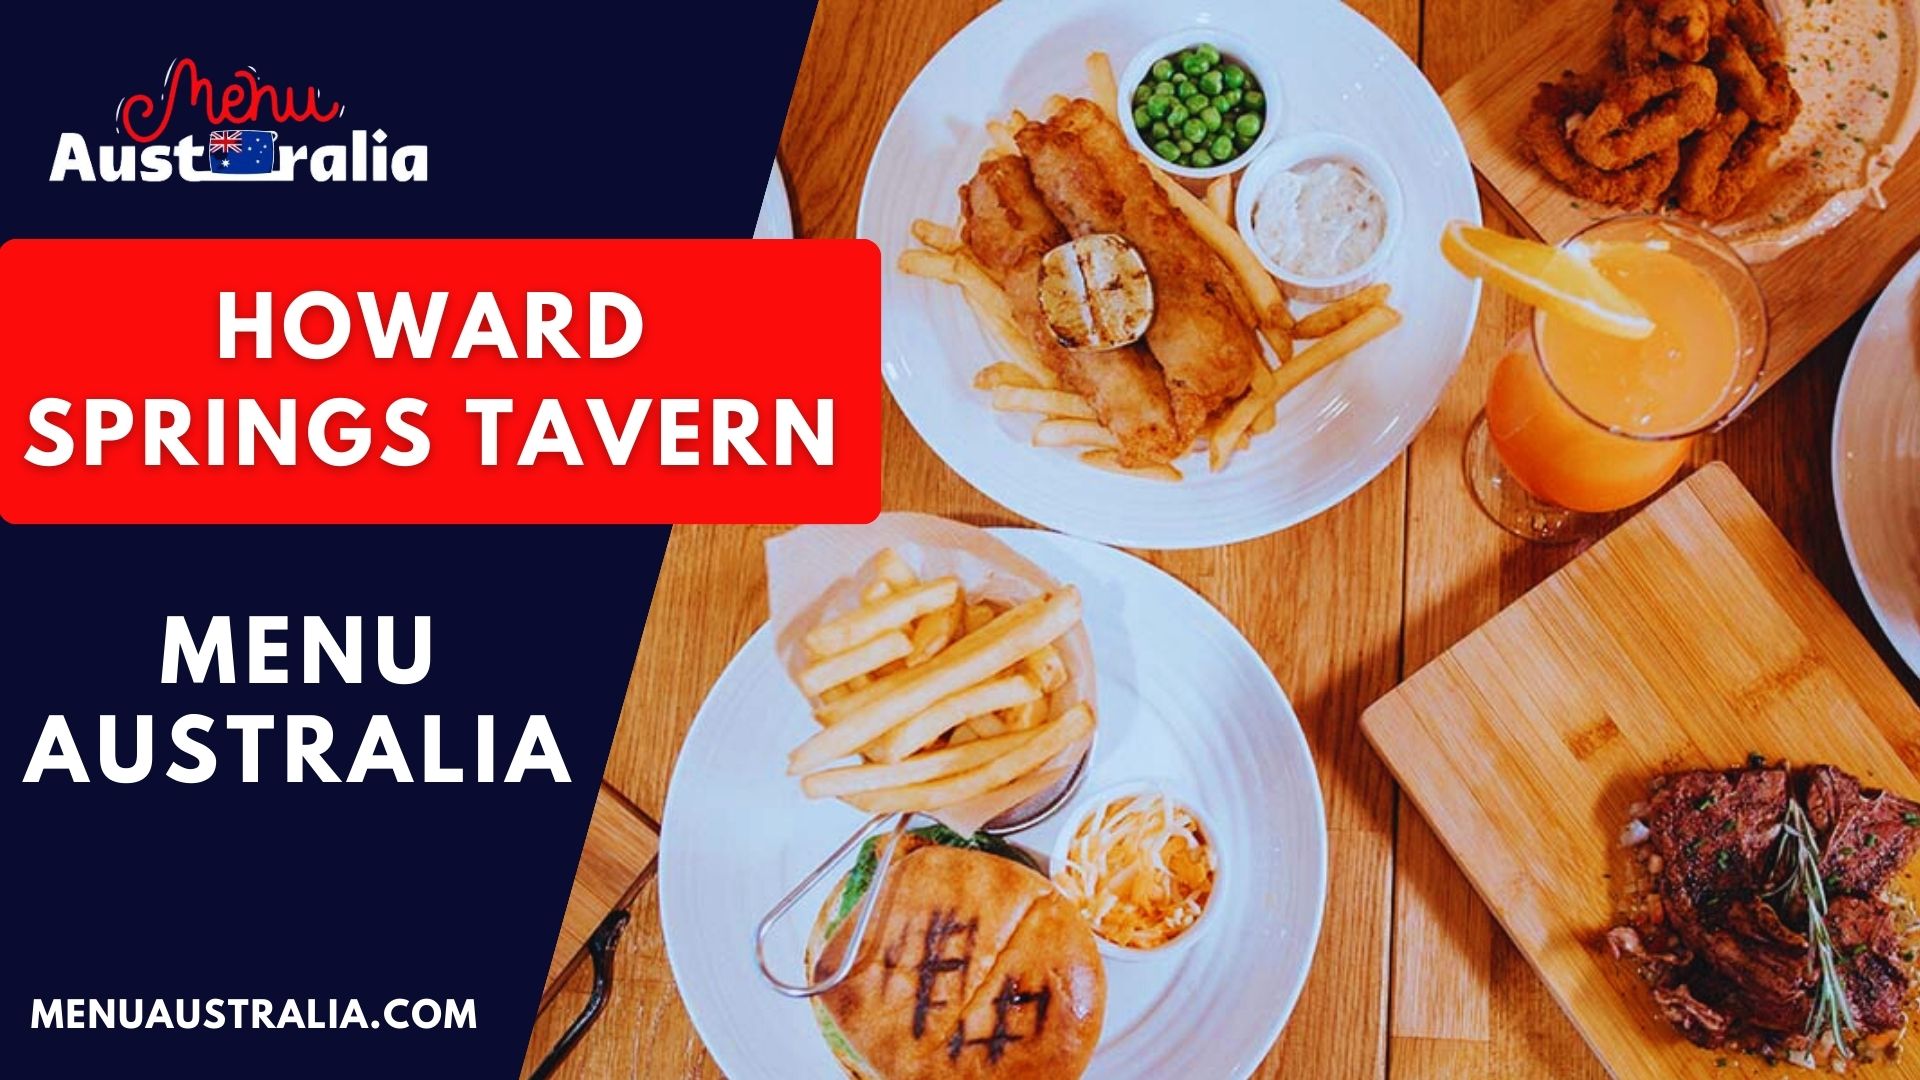 Howard Springs Tavern Menu Australia